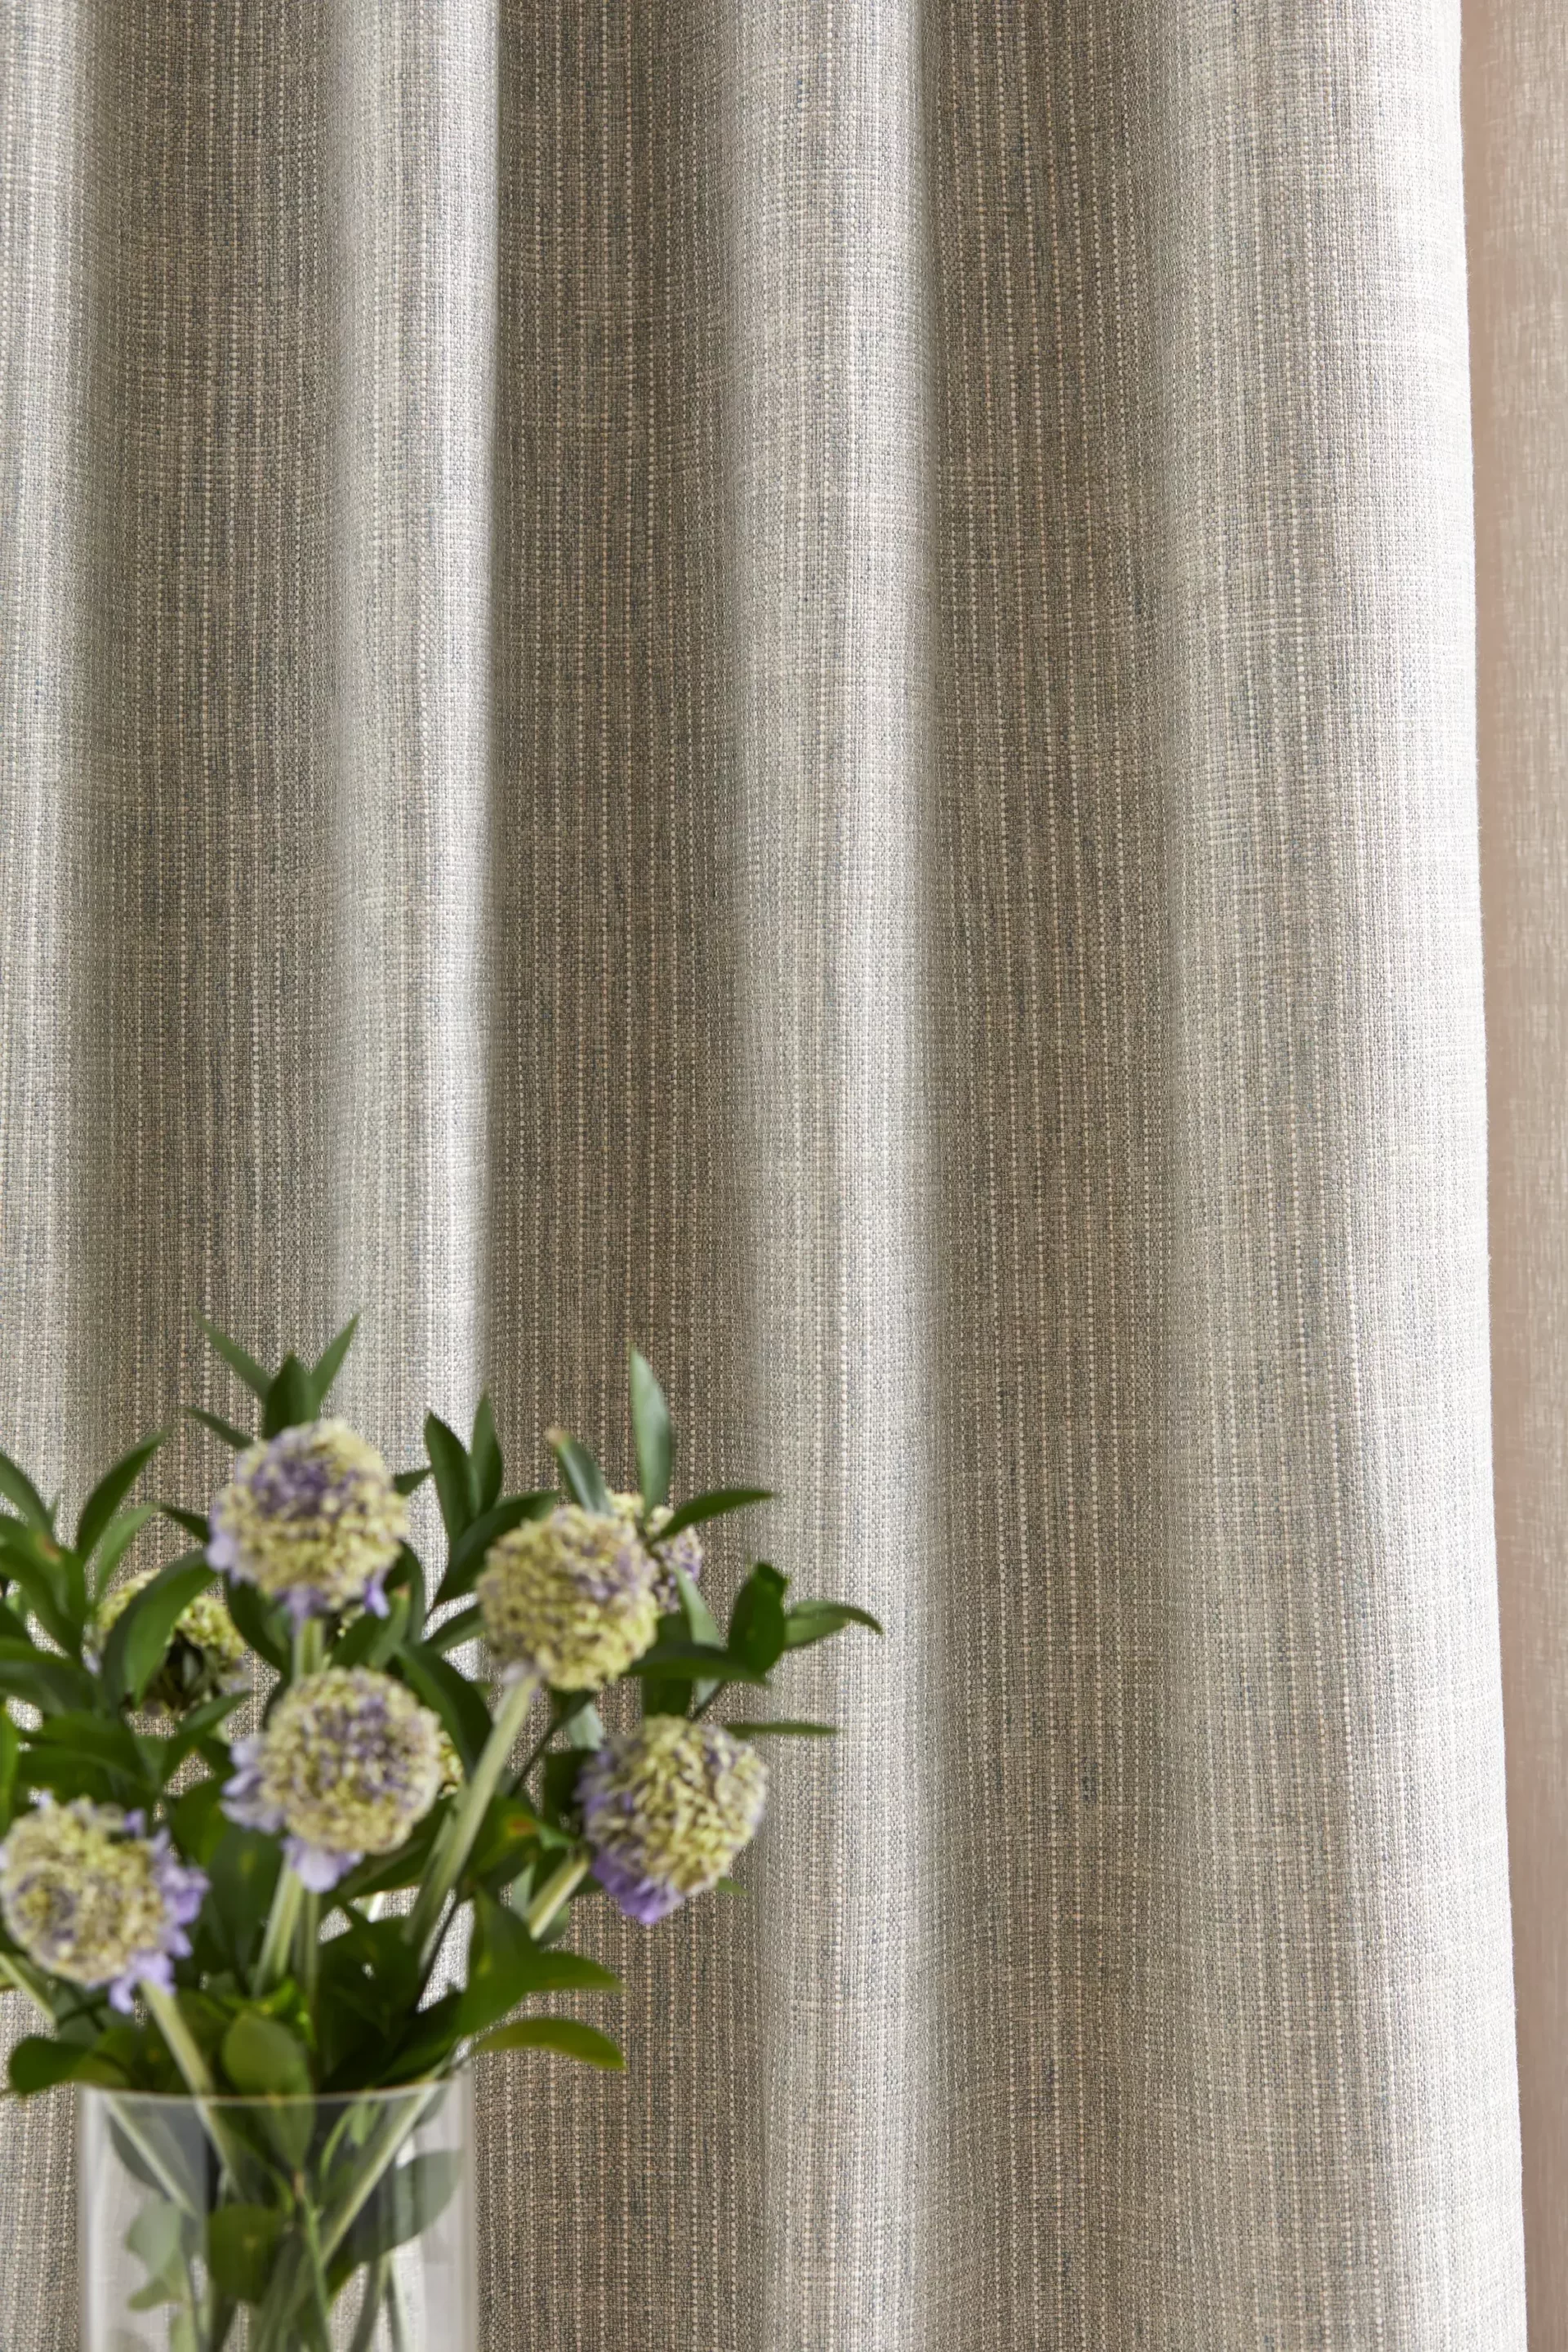 Rathlin Upholstery Fabric By Warwick Fabrics. Linen Slub Fabric.